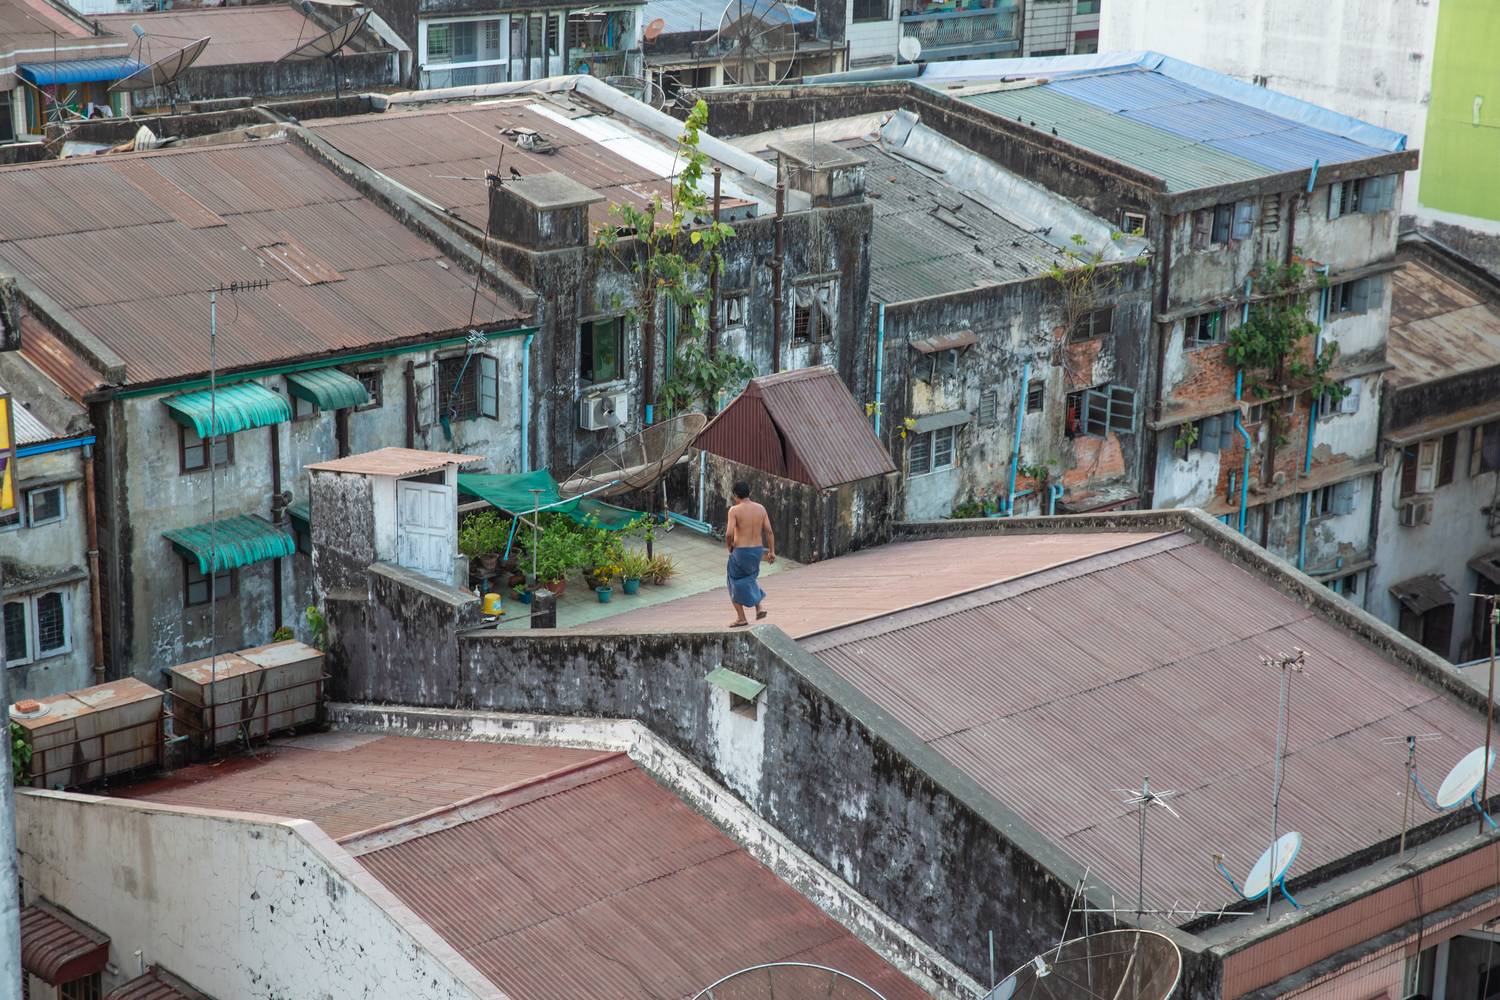 Leben auf dem Dach, Yangon (Rangun) Myanmar (Burma) von Miro May